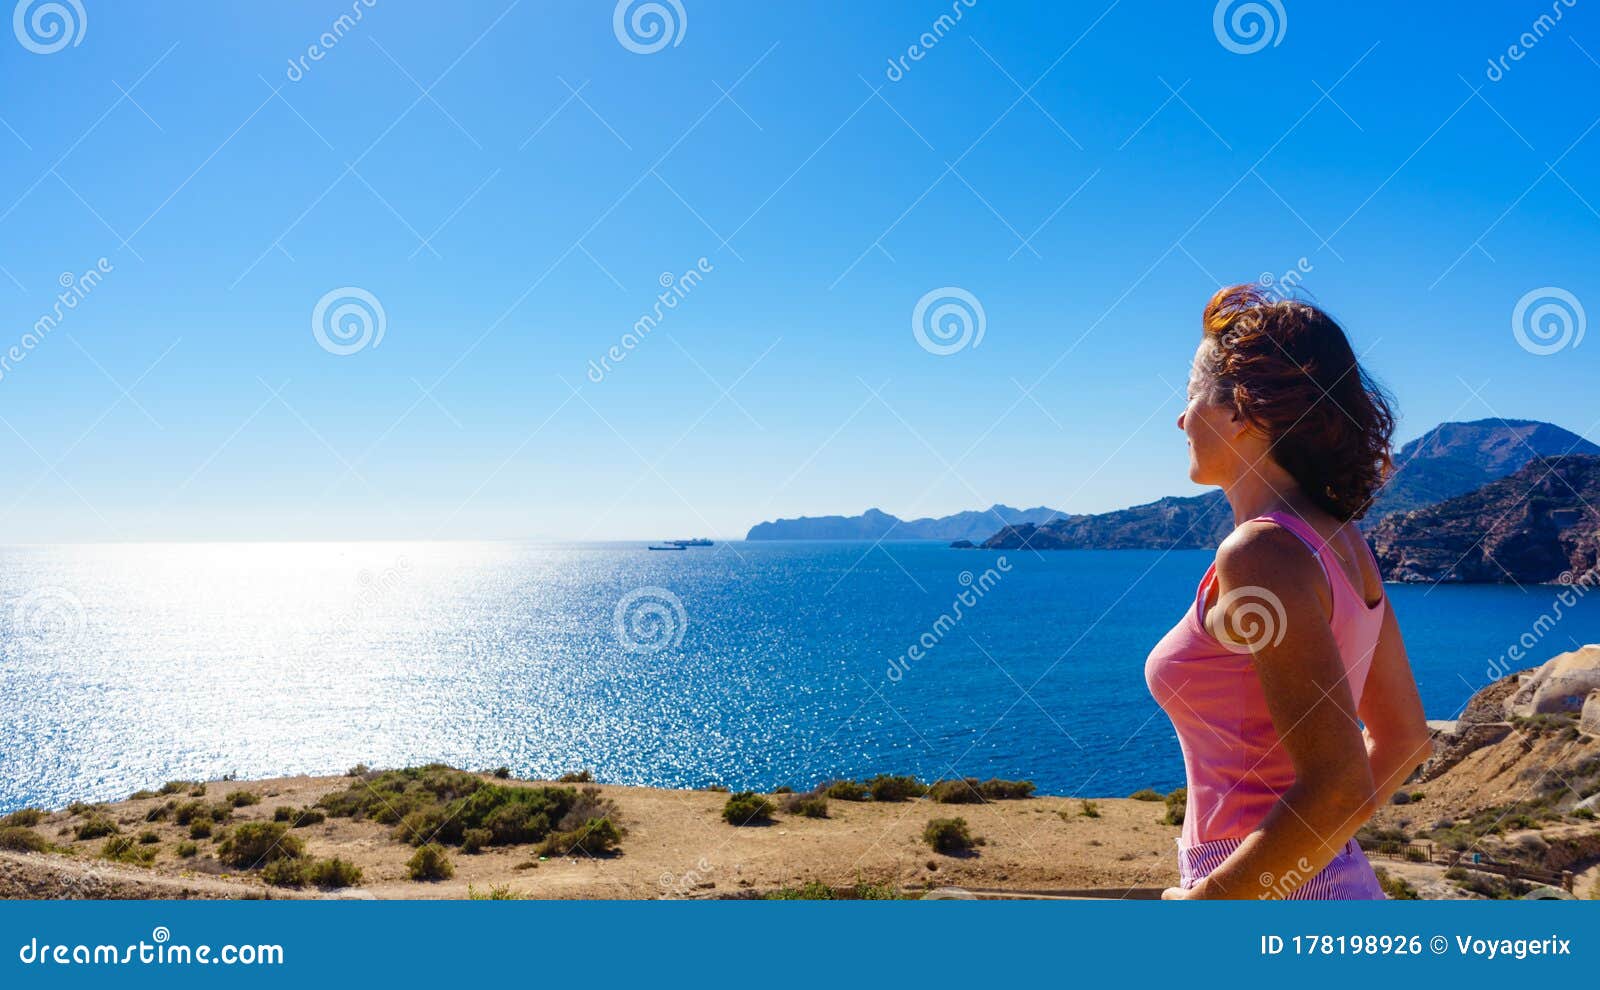 woman enjoy sea breeze